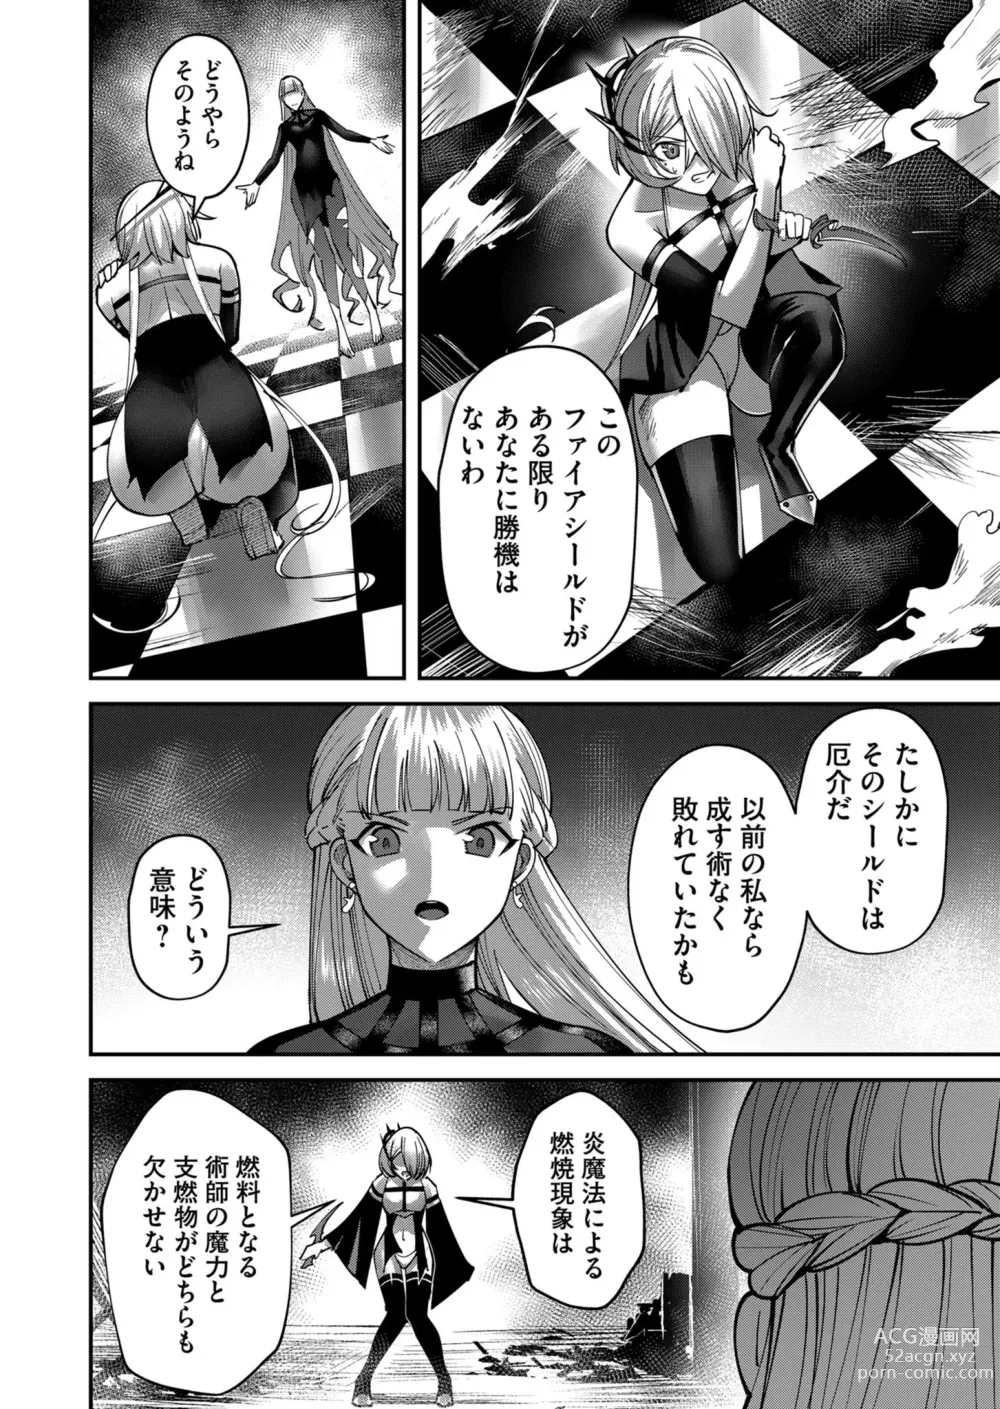 Page 14 of manga Kichiku Eiyuu Vol.03